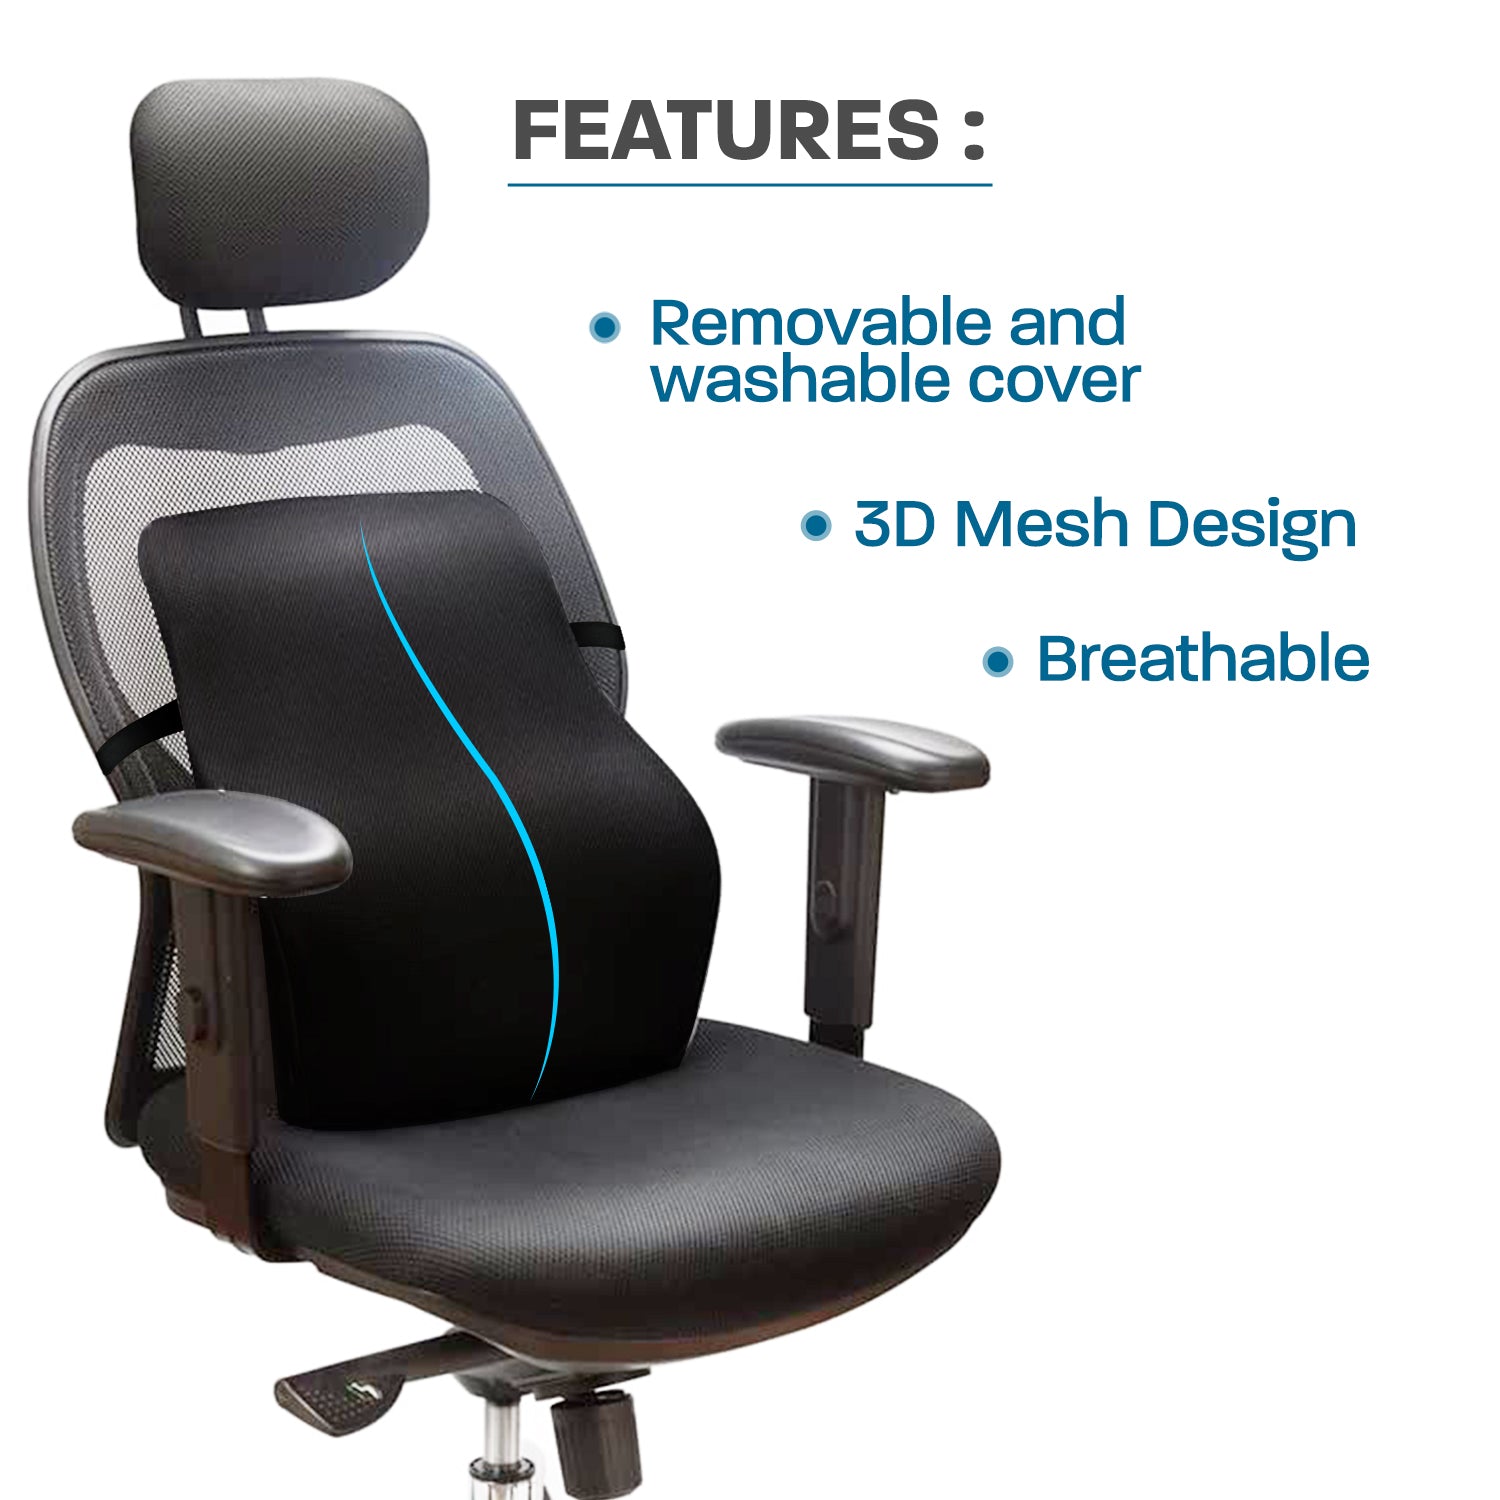 Ergo21 Comfortable Lumbar Support Pillow for Office Chair